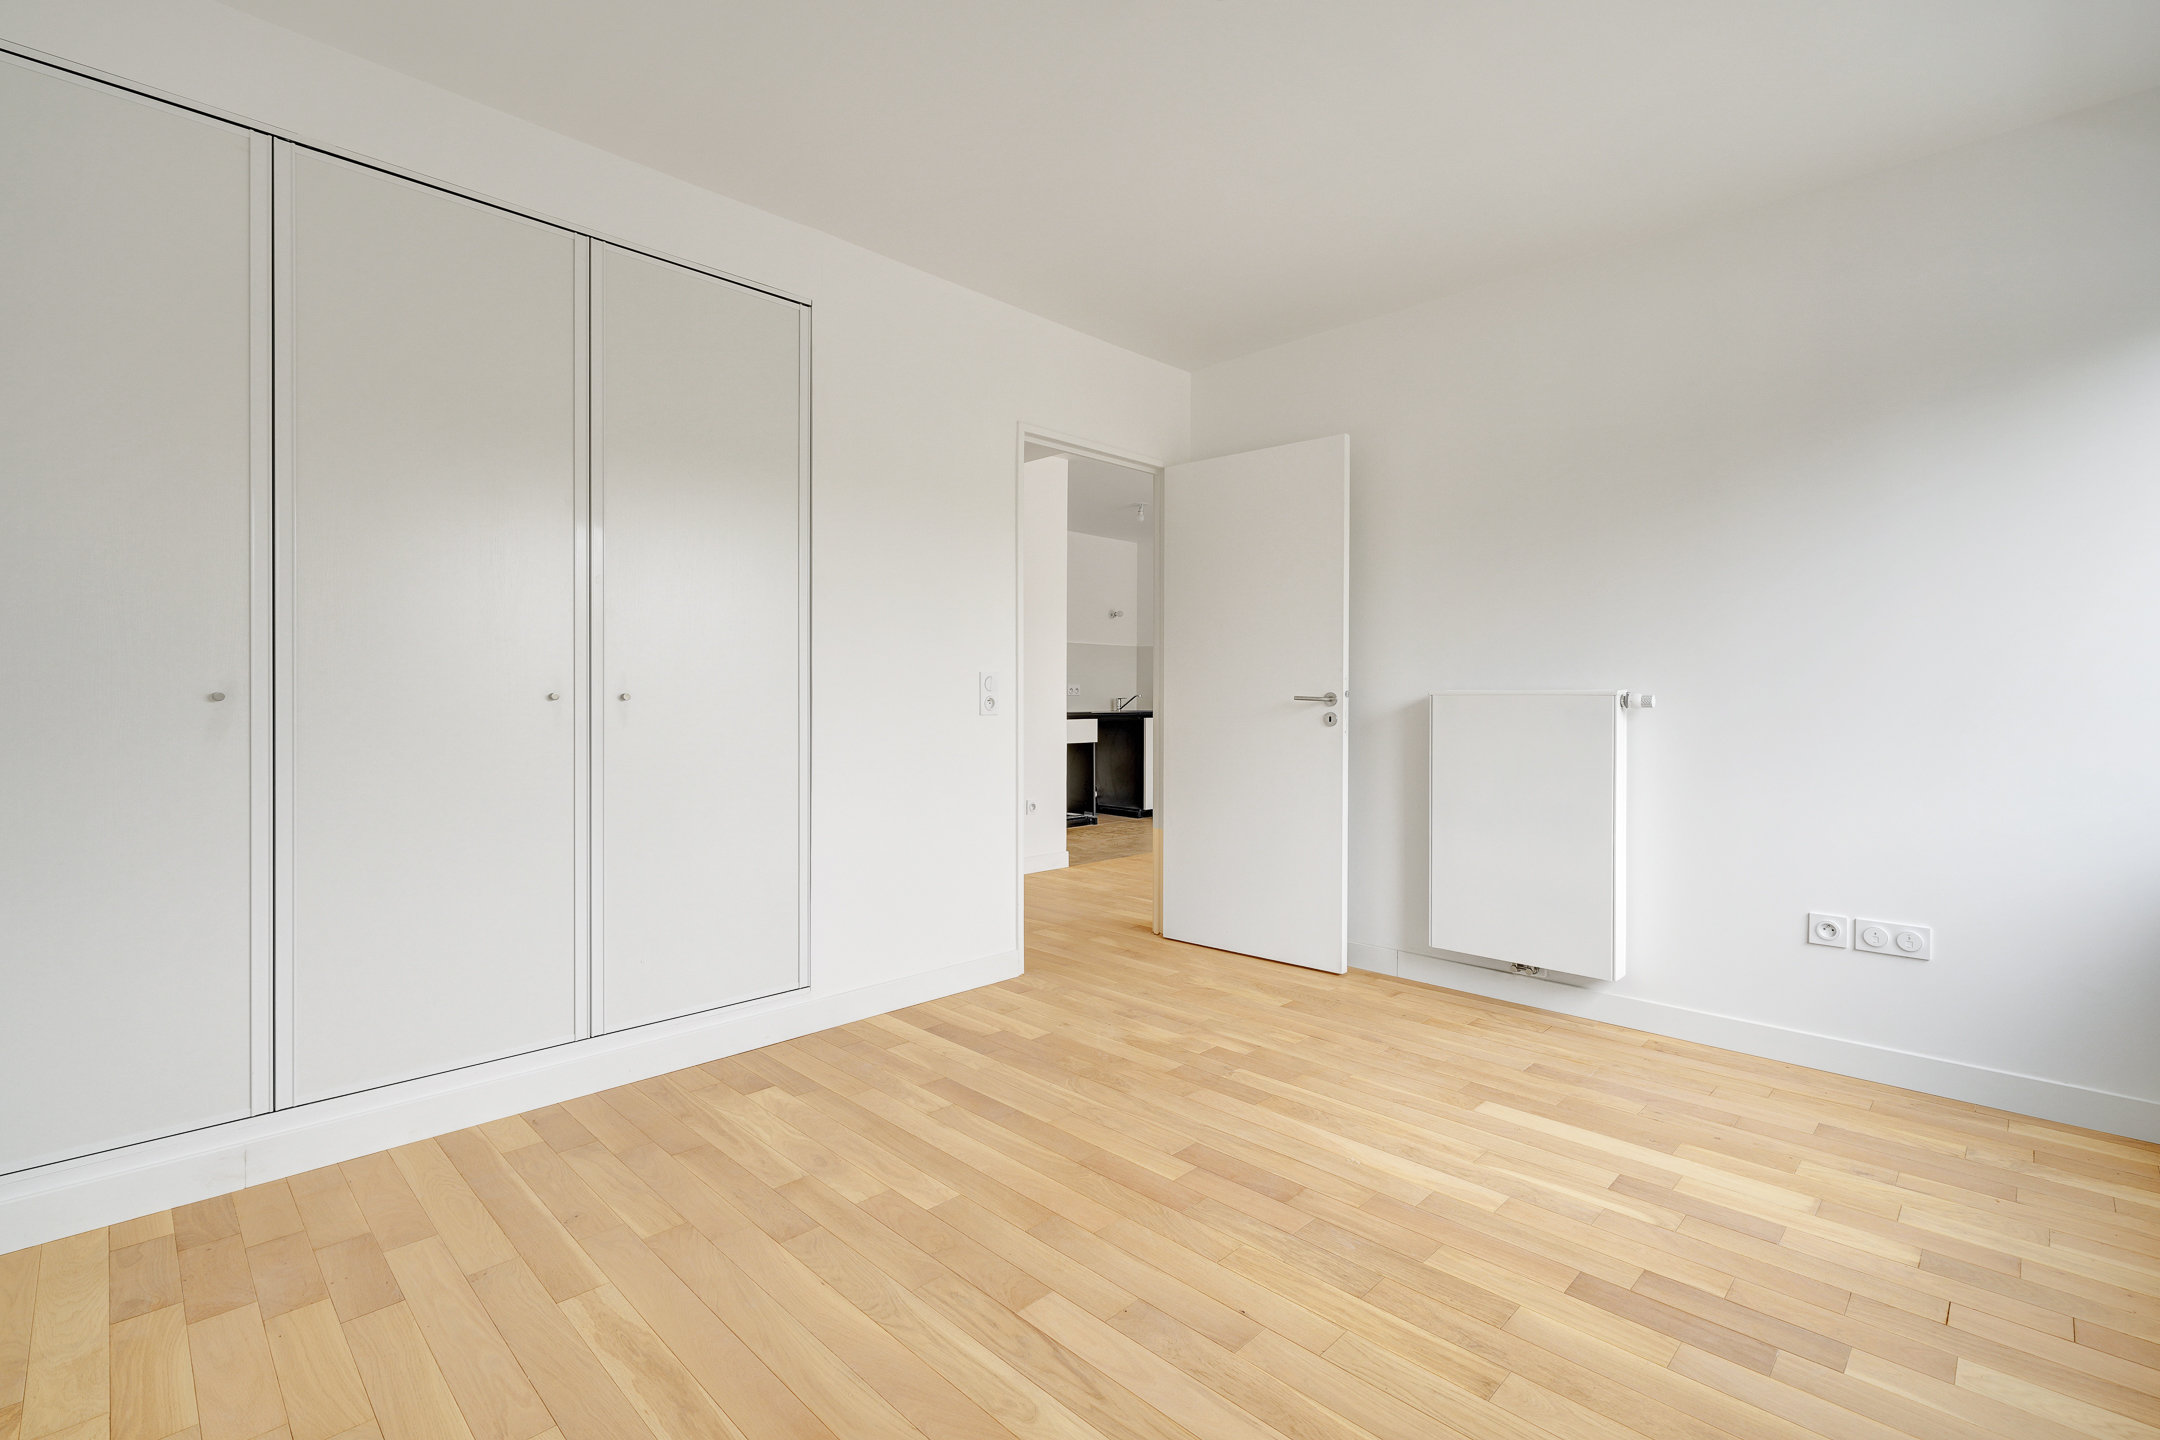 Appartement a louer ville-d'avray - 2 pièce(s) - 49.12 m2 - Surfyn